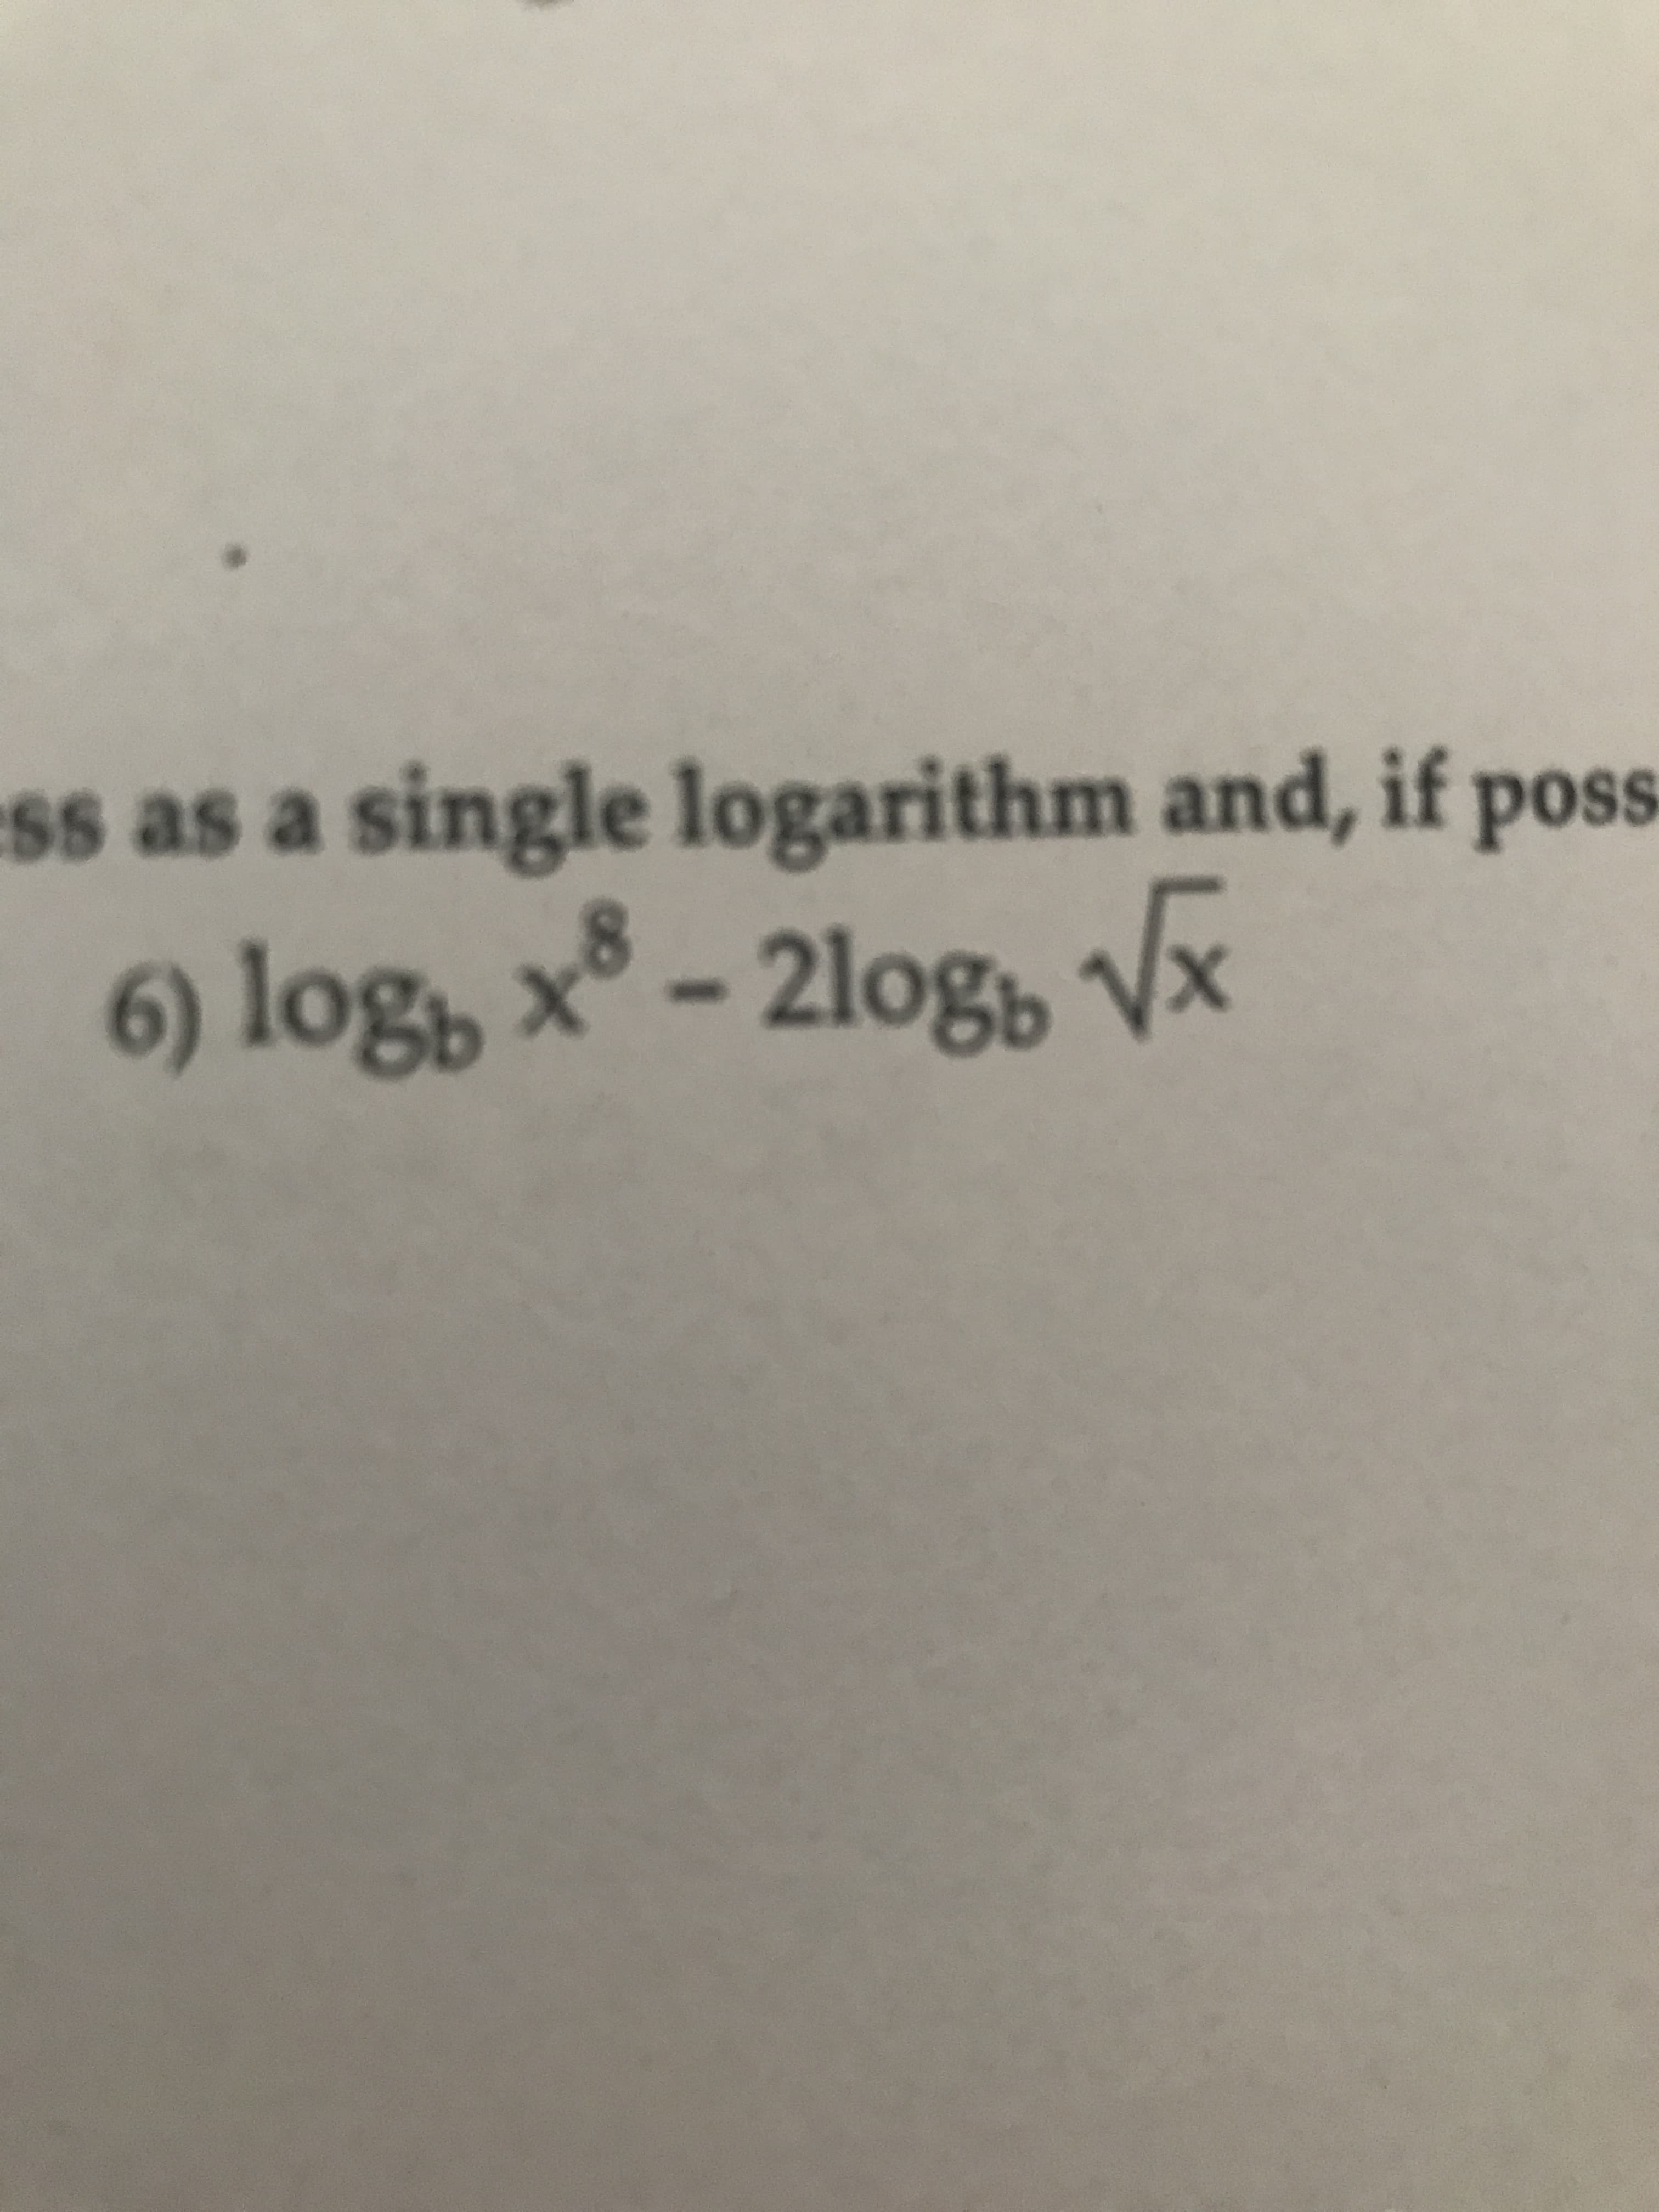 ss as a single logarithm and, if poss
6) log x° - 2log Vx
